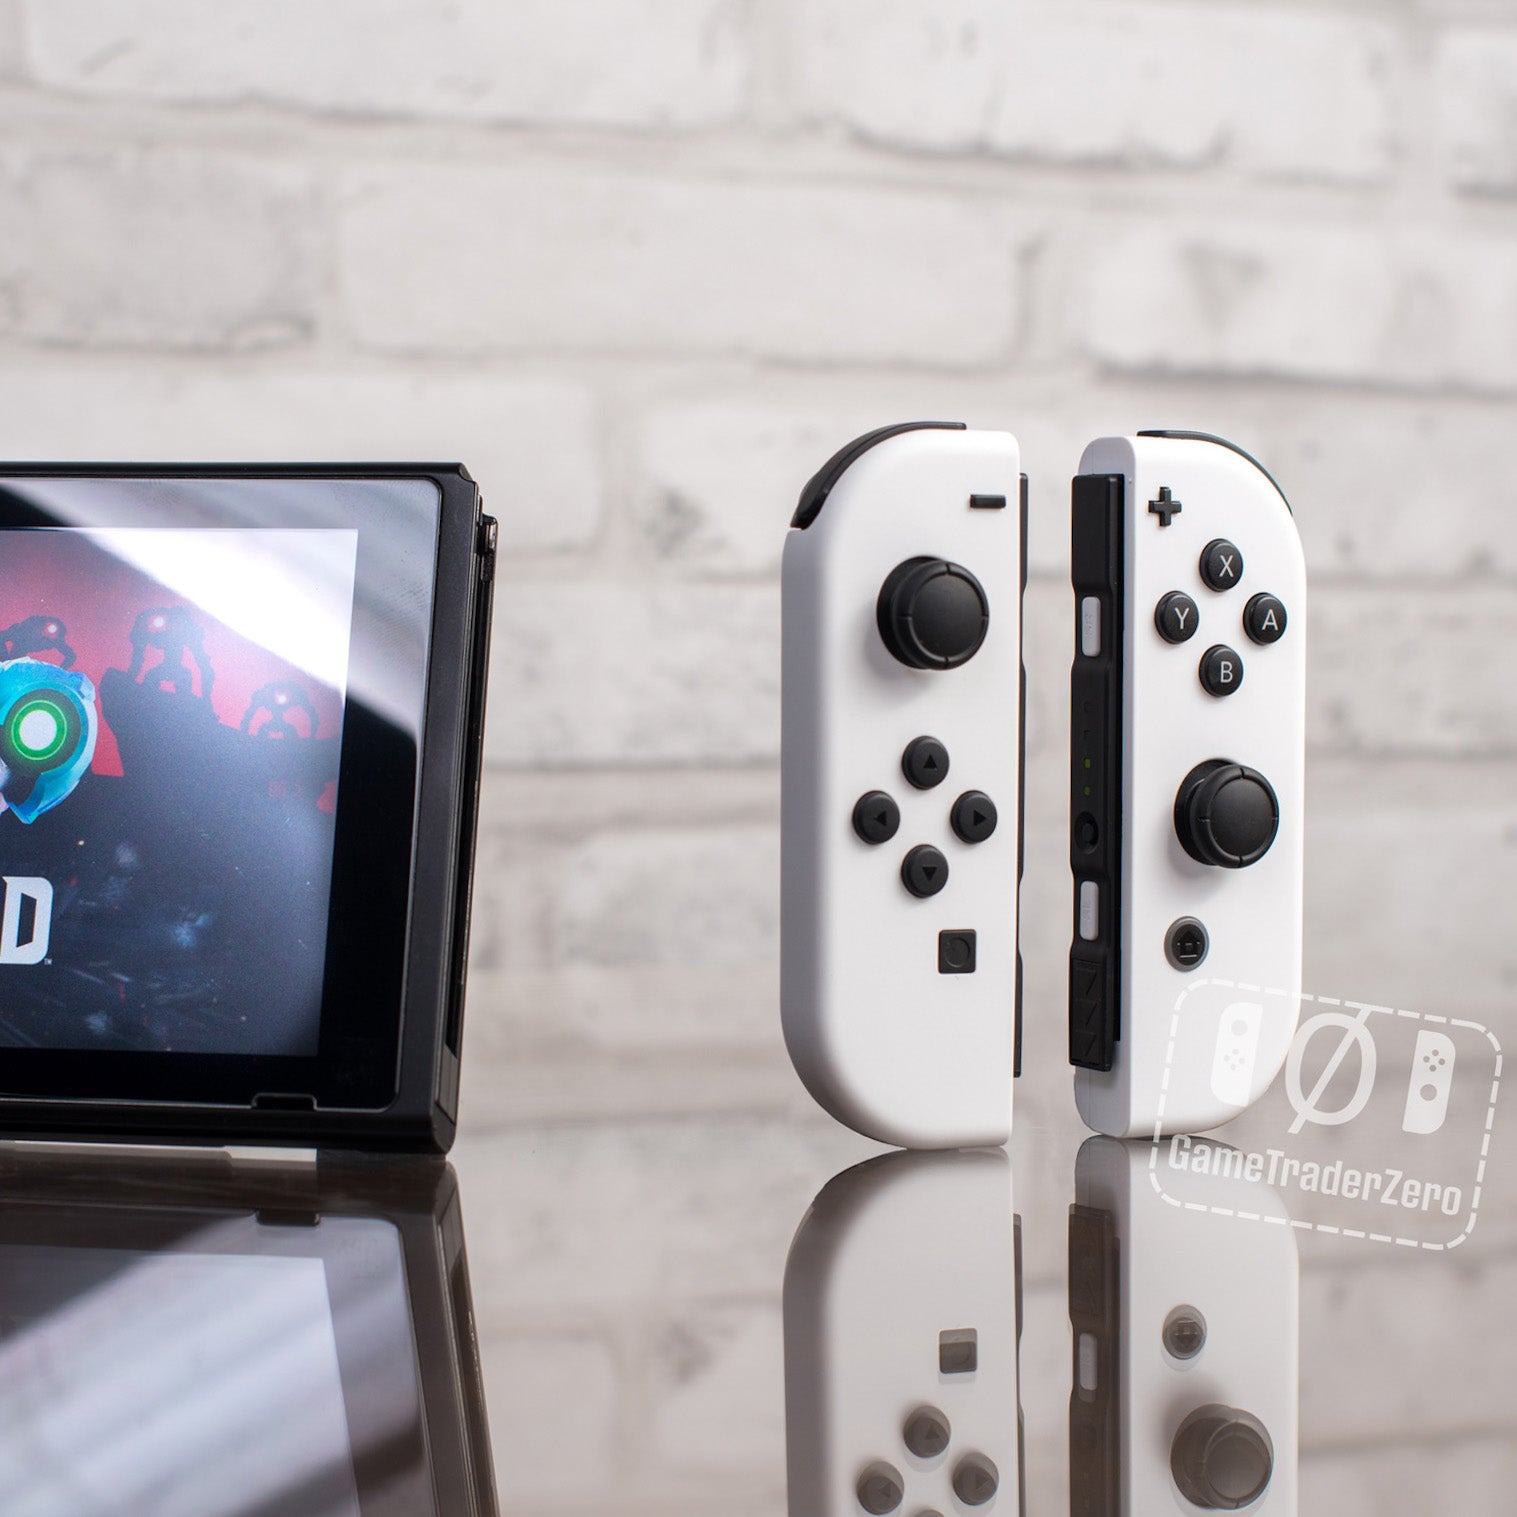 Nintendo Switch (OLED) with White Joy-Con